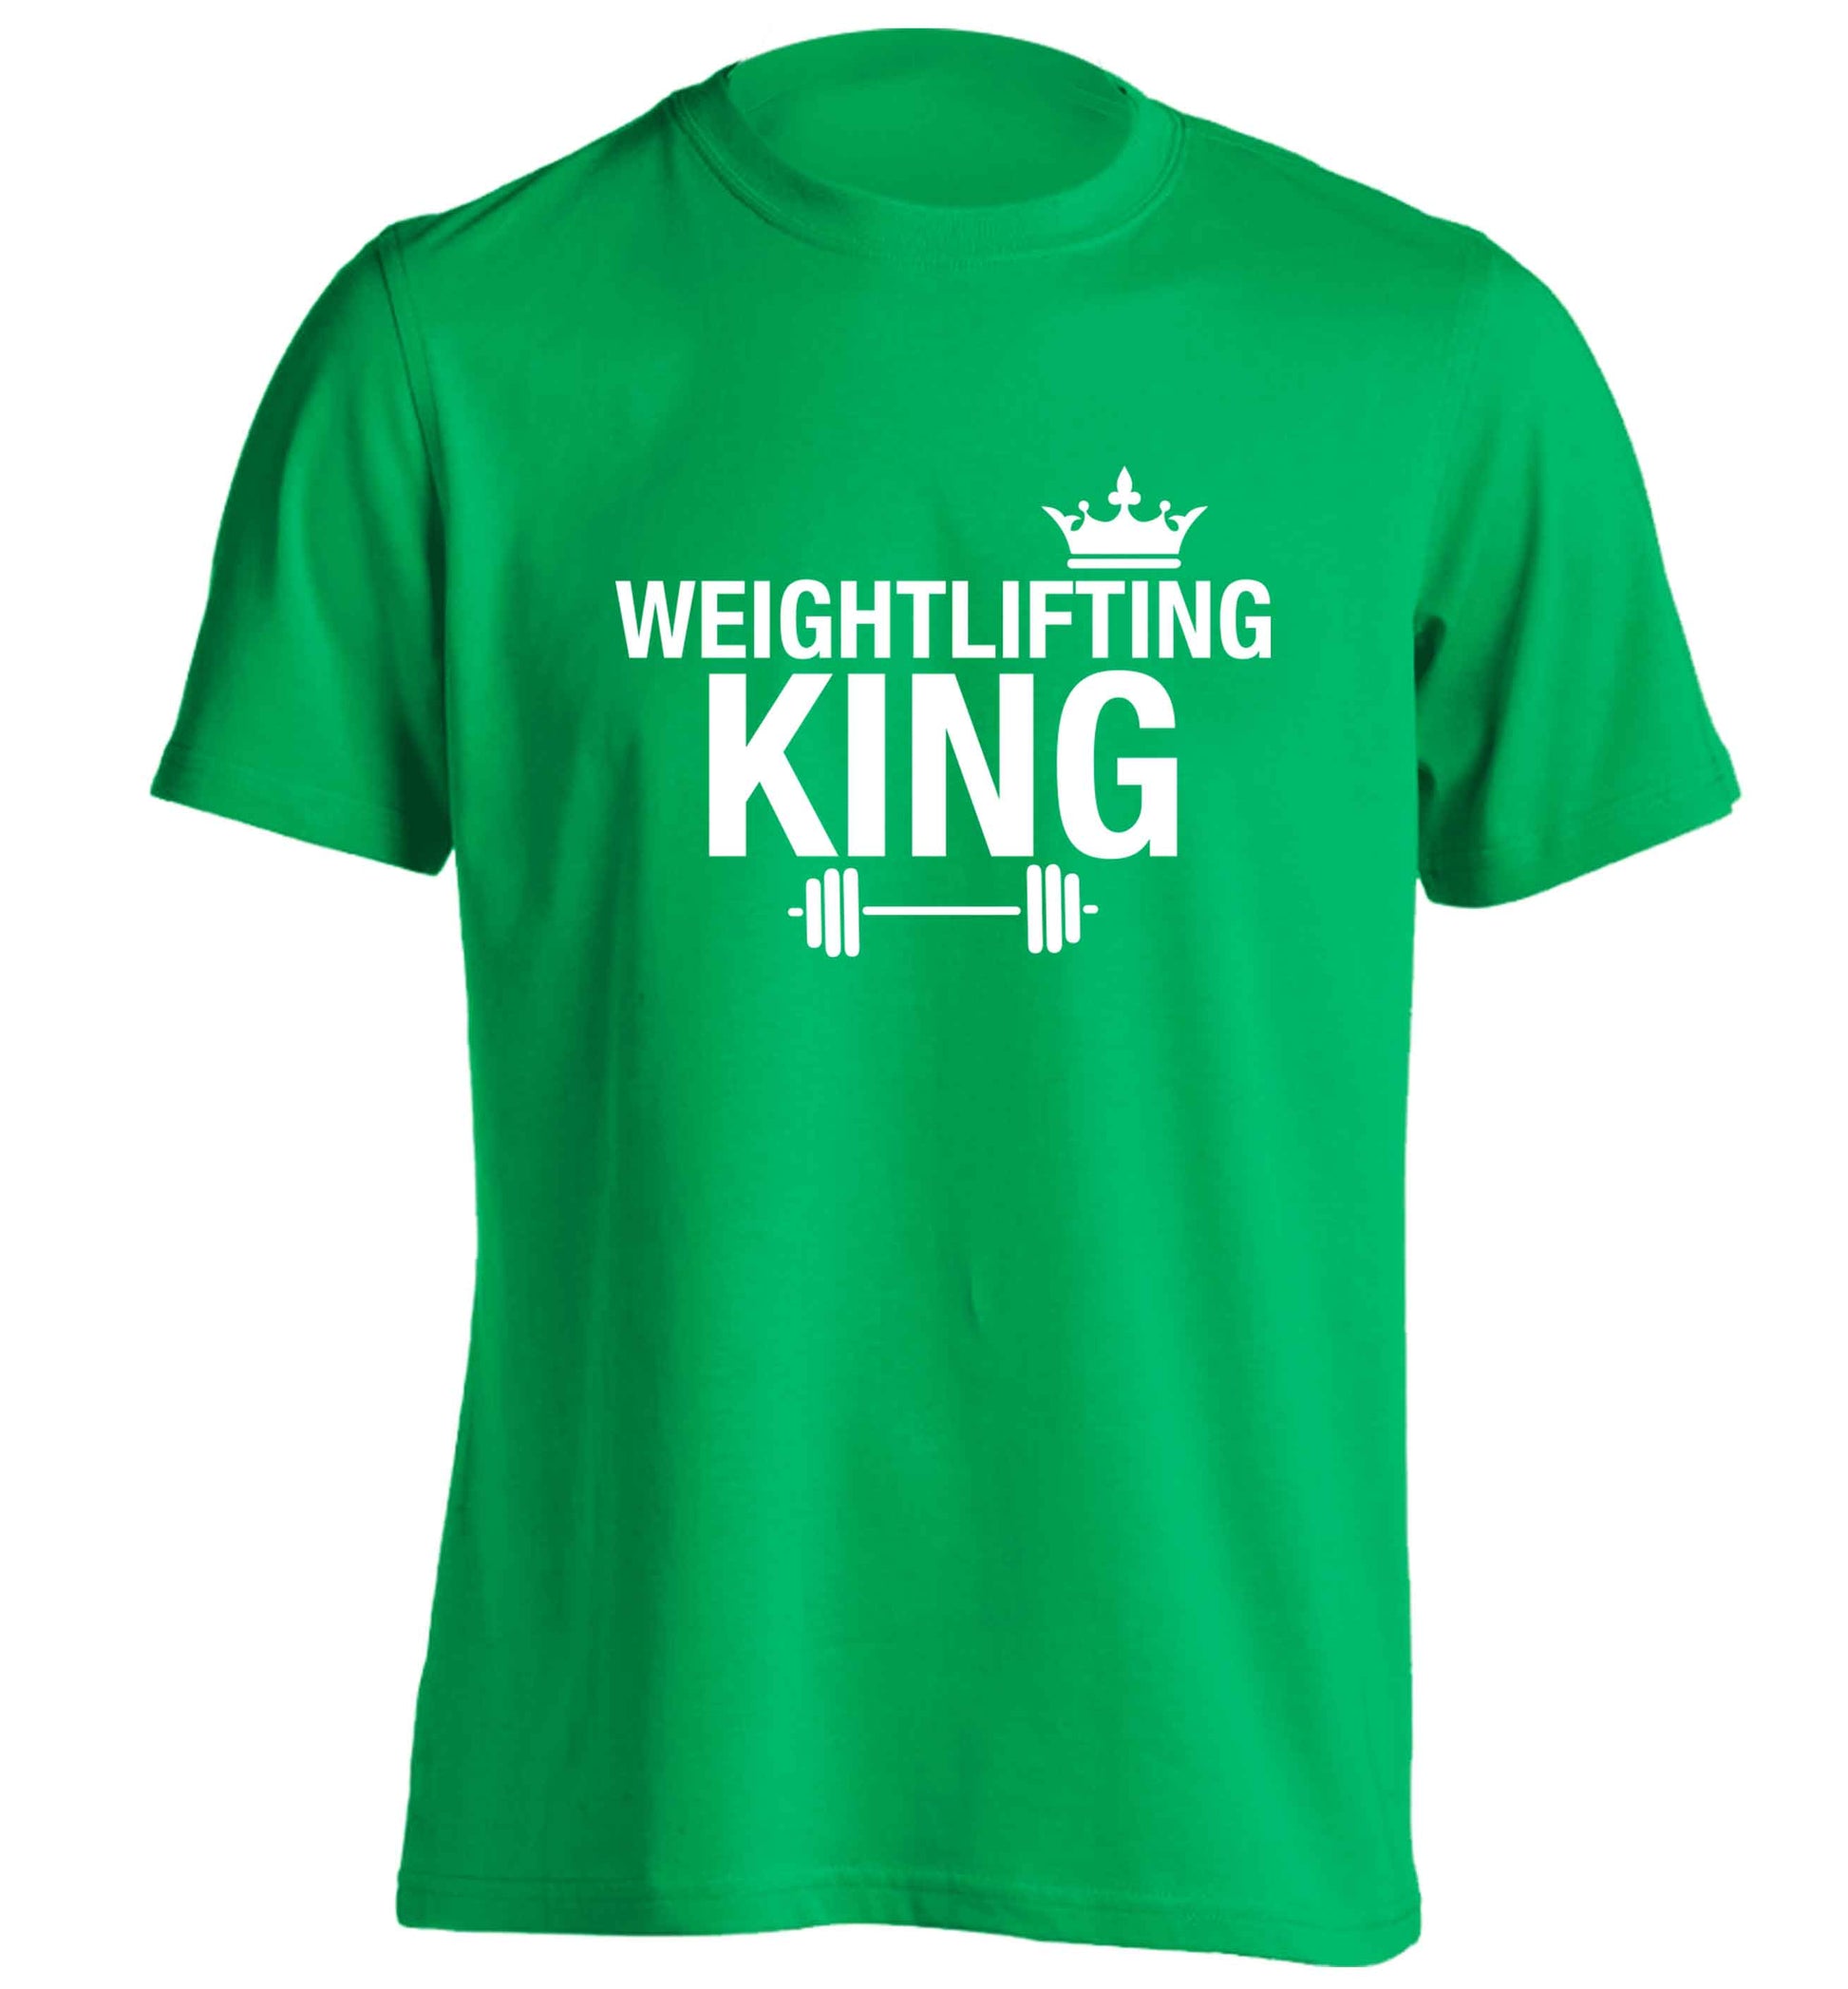 Weightlifting king adults unisex green Tshirt 2XL